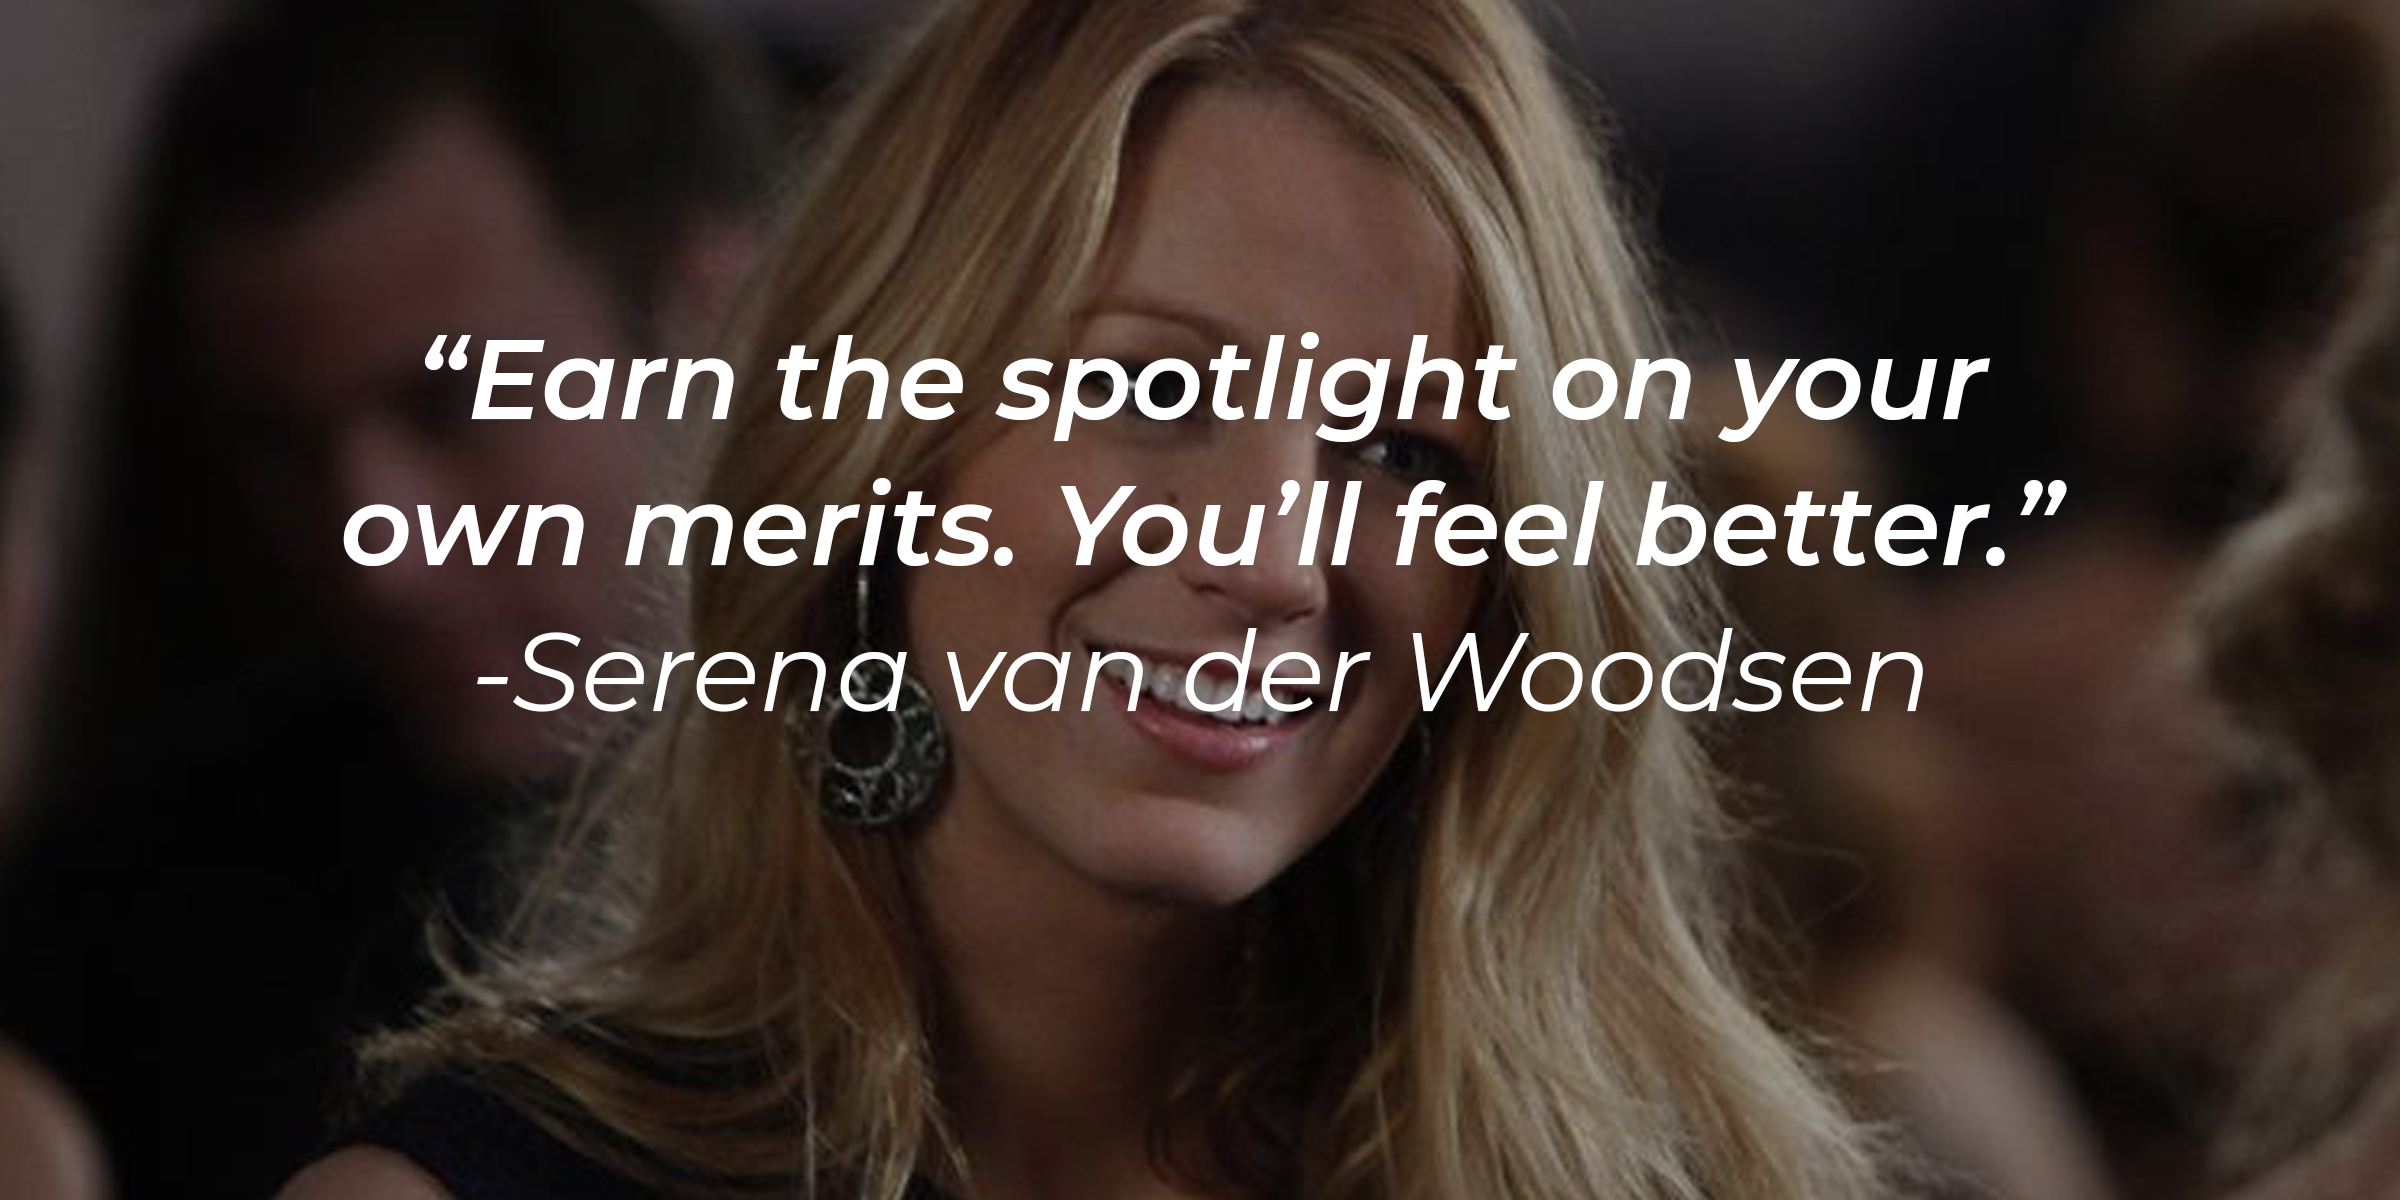 Serena van der Woodsen, with her quote: “Earn the spotlight on your own merits. You’ll feel better.” | Source: Facebook.com/GossipGirl